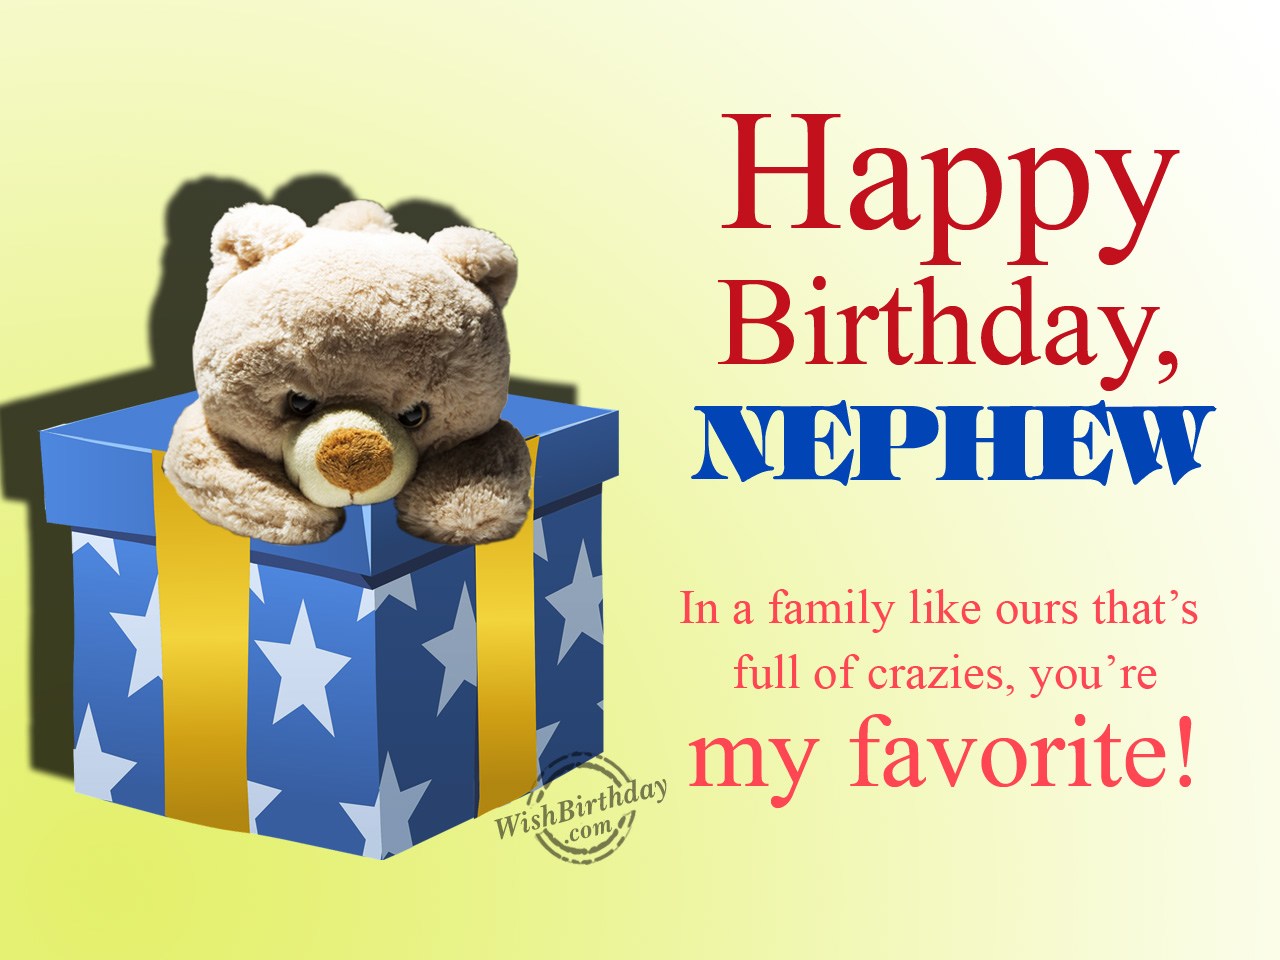 Happy birthday Nephew - Birthday Wishes, Happy Birthday Pictures